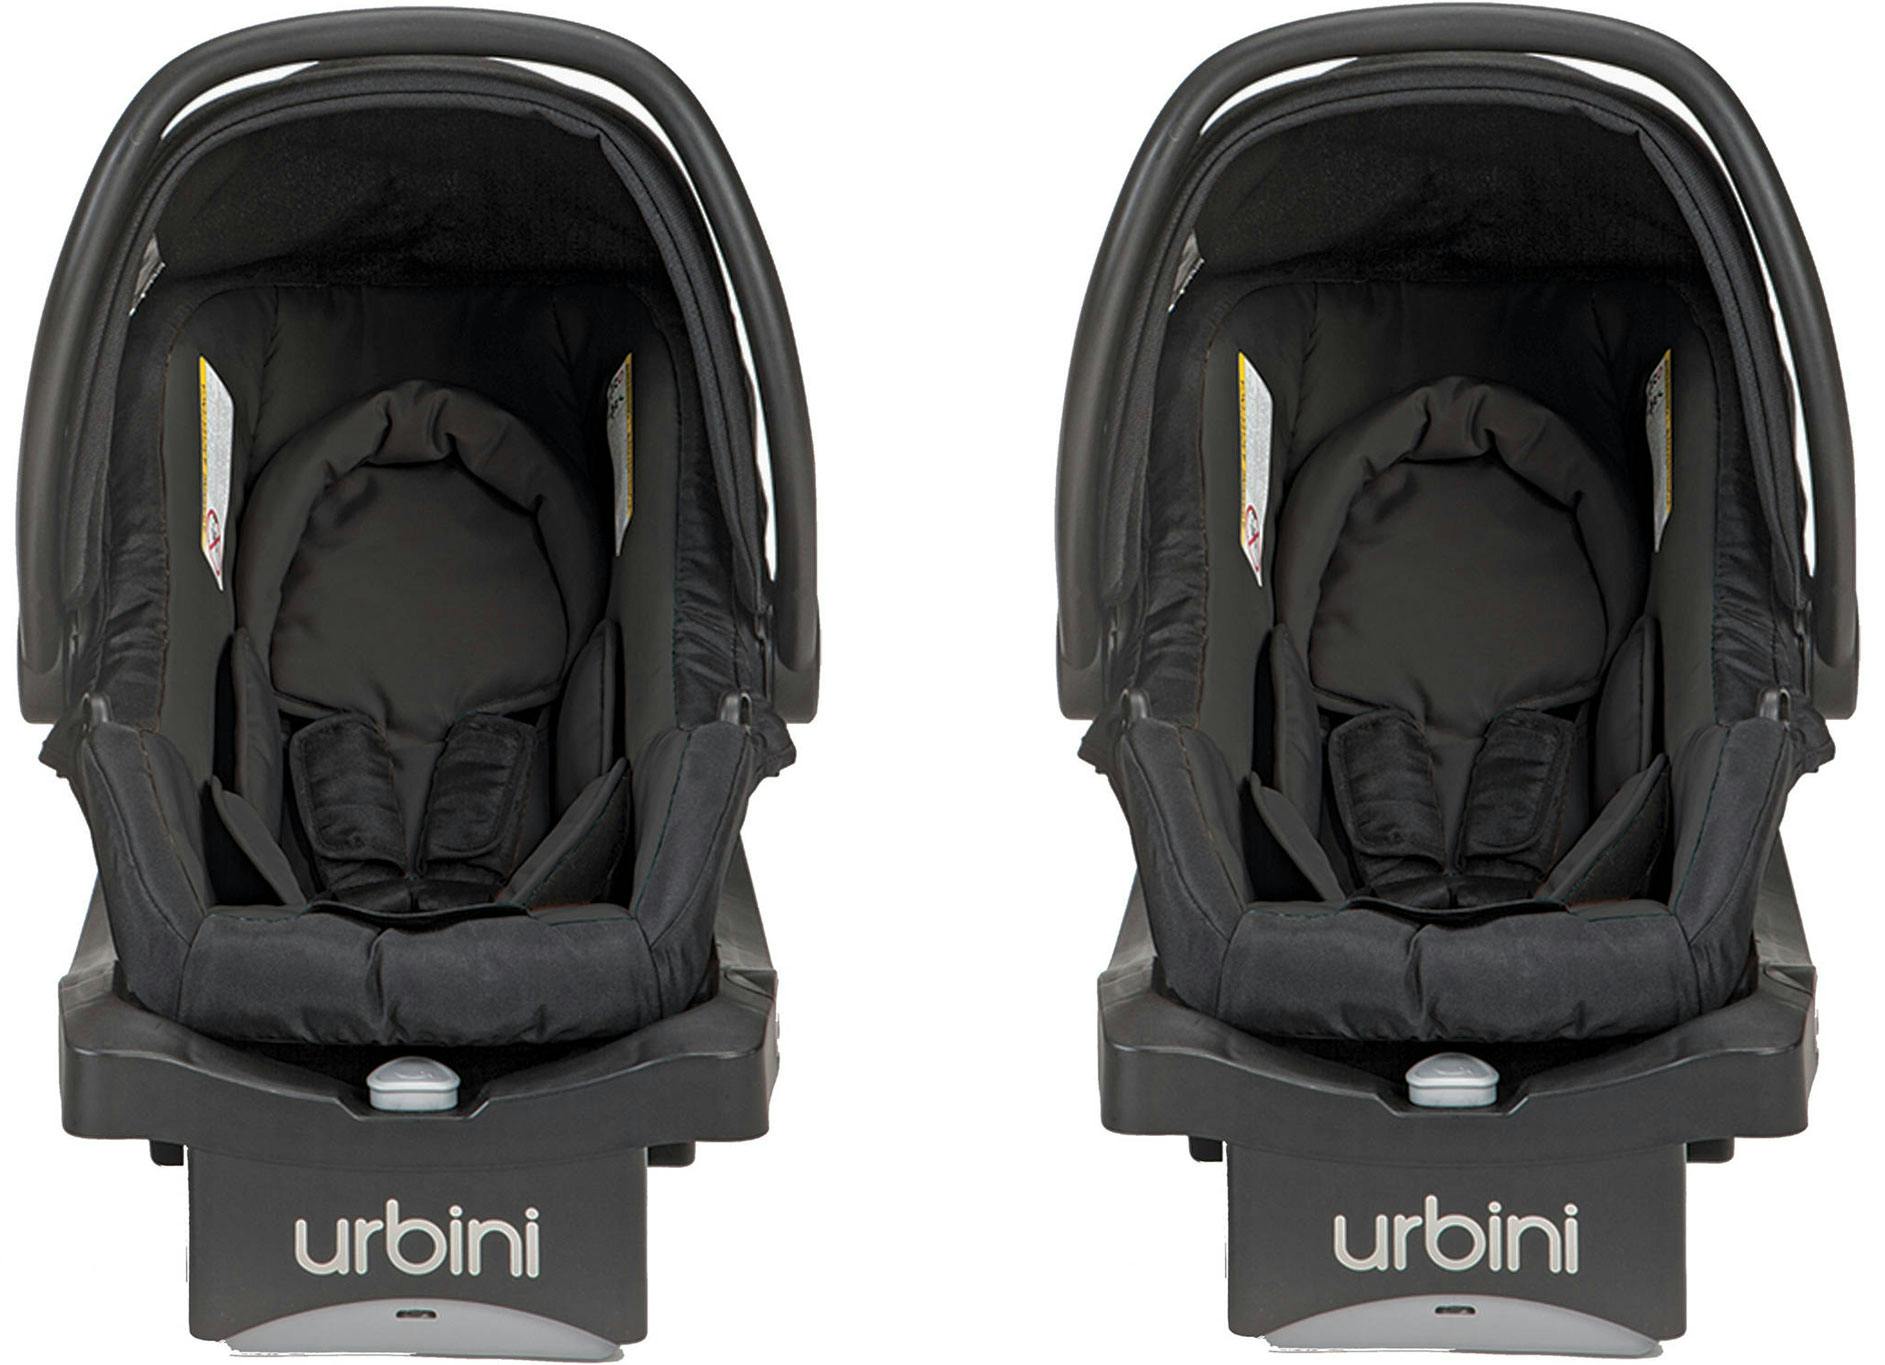 urbini black car seat